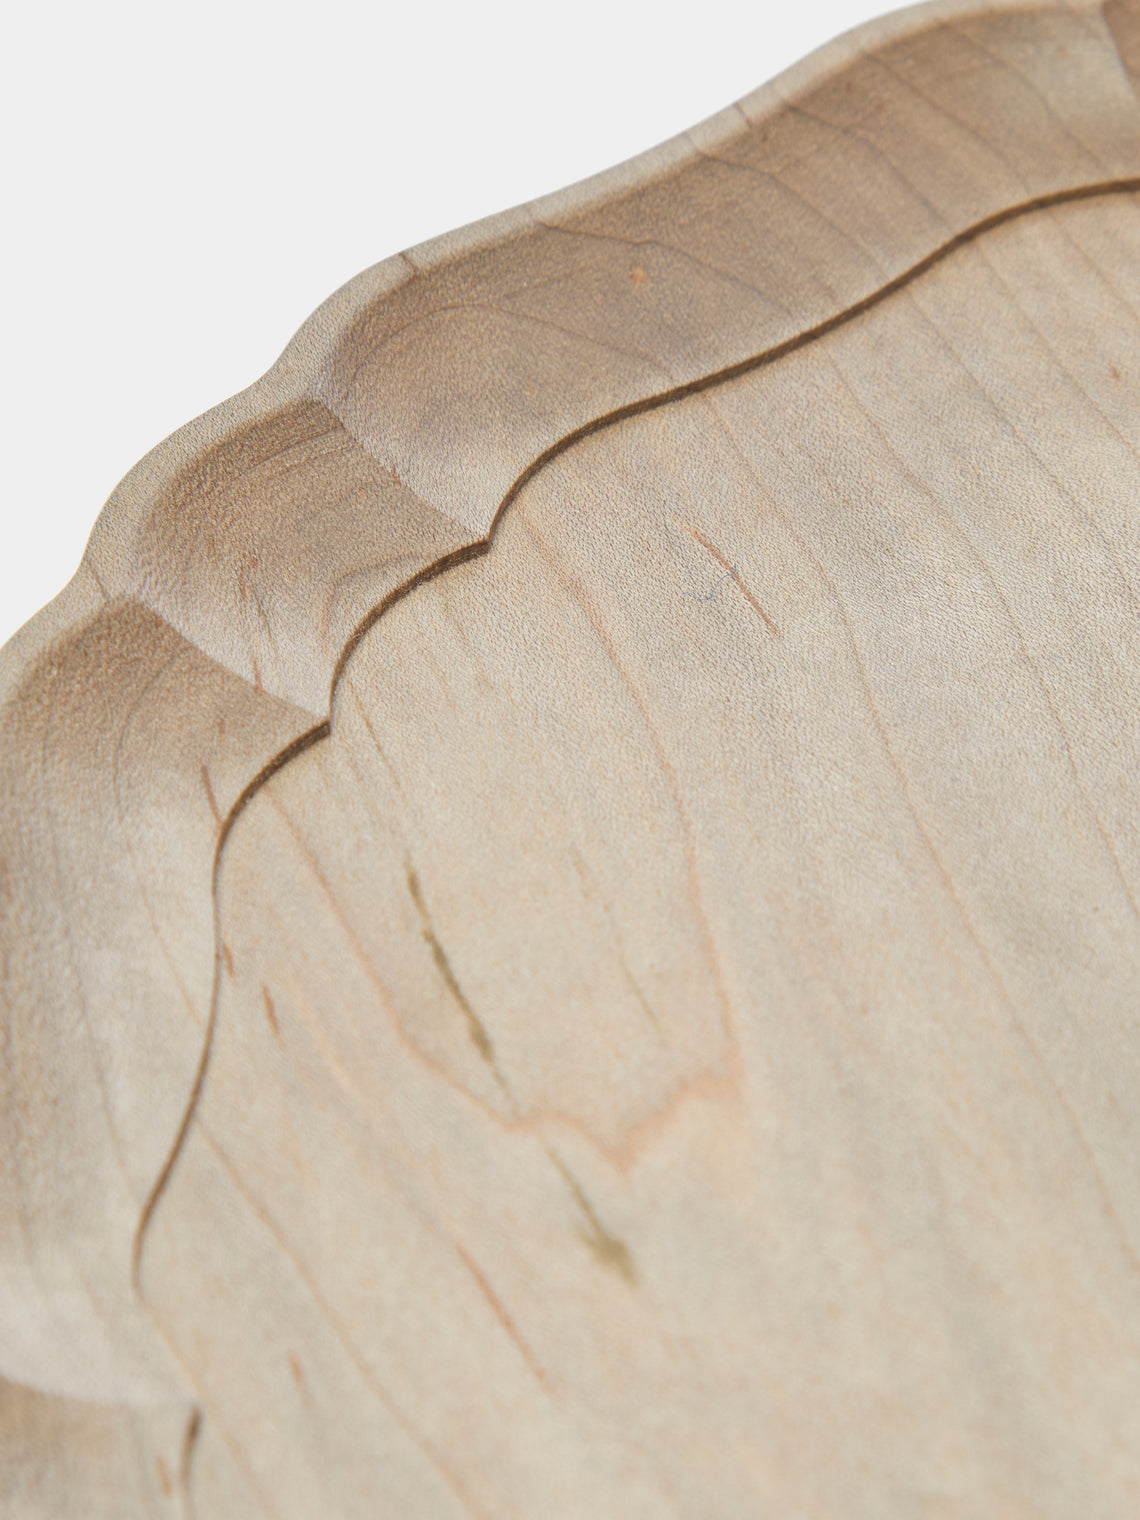 Ifuji - Italian Hand-Carved Wood Round Tray - Brown - ABASK